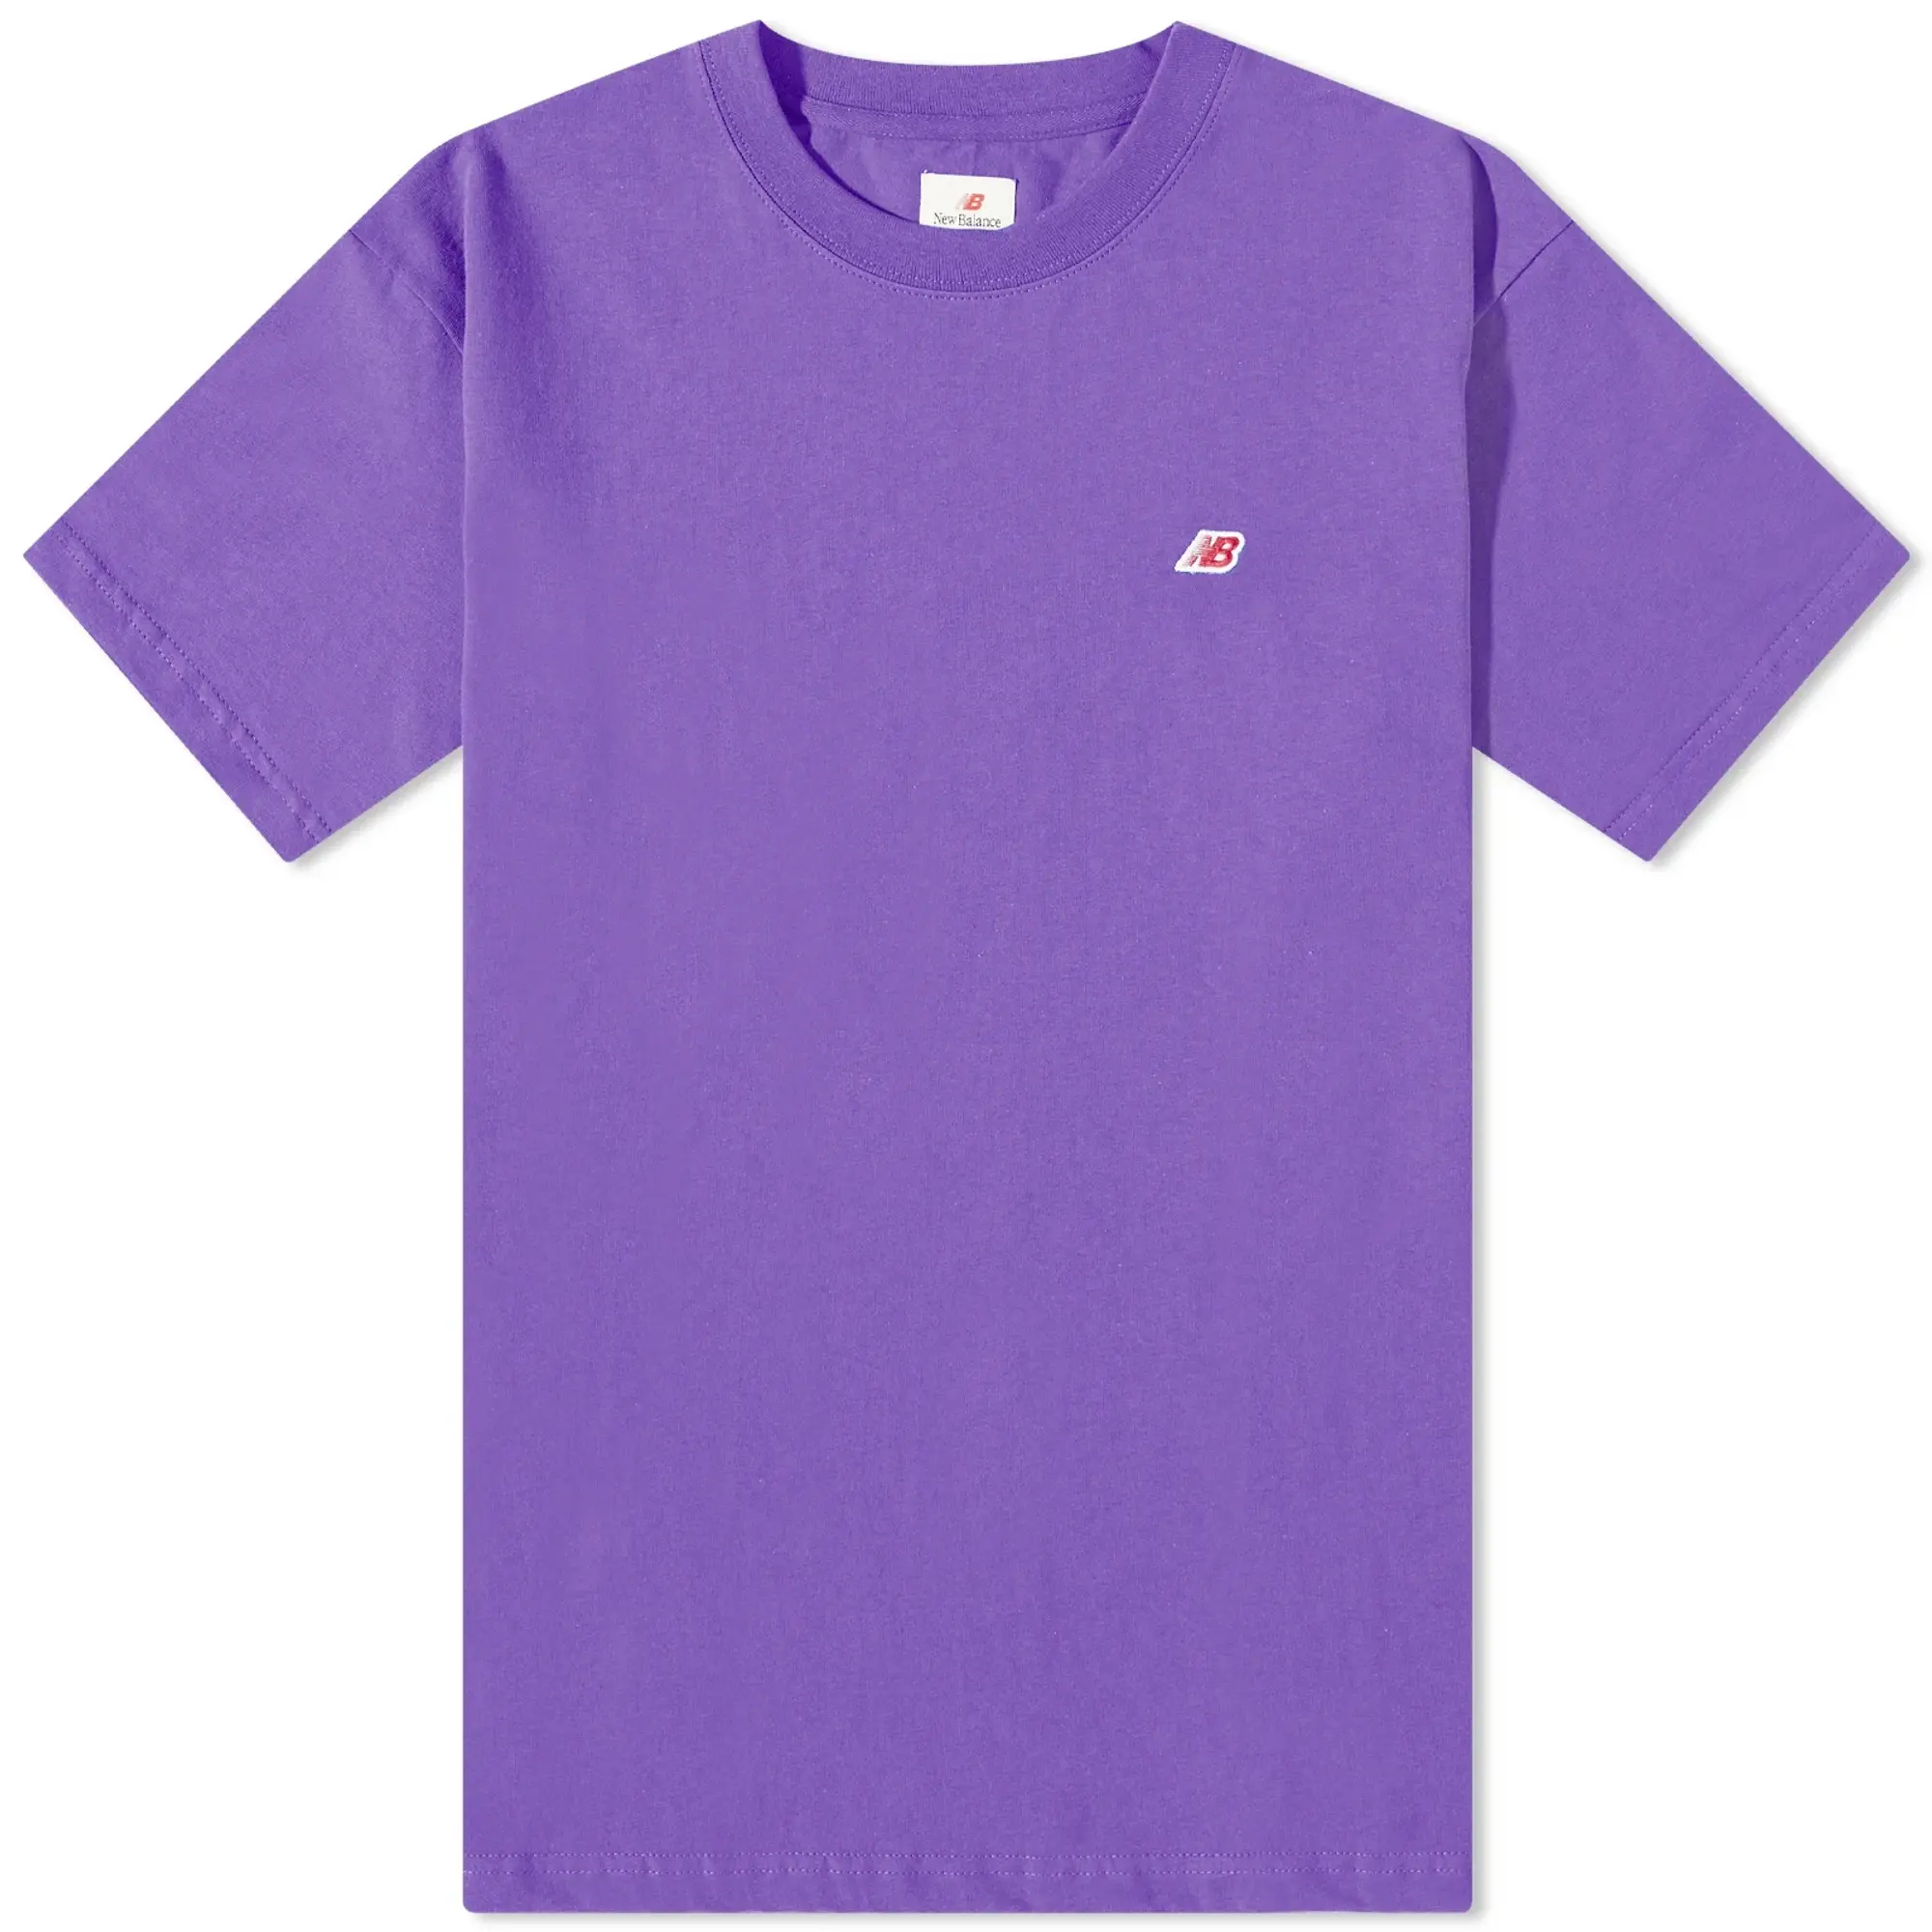 New Balance Made in USA Core T-Shirt, Purple